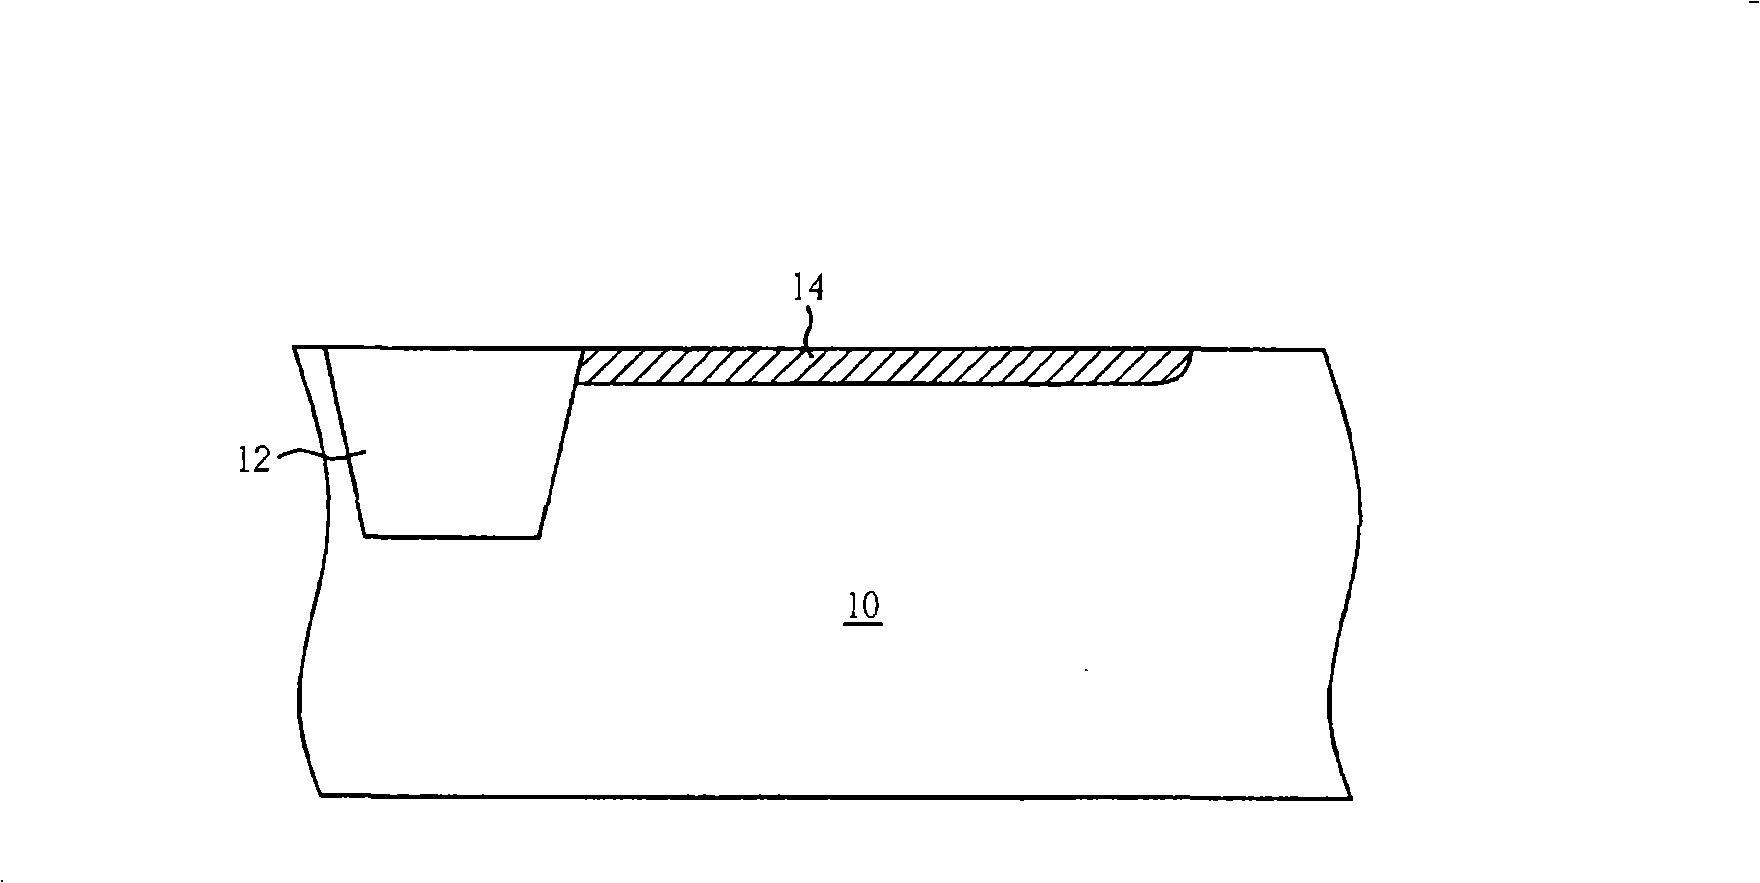 Production method of light sensitive diode